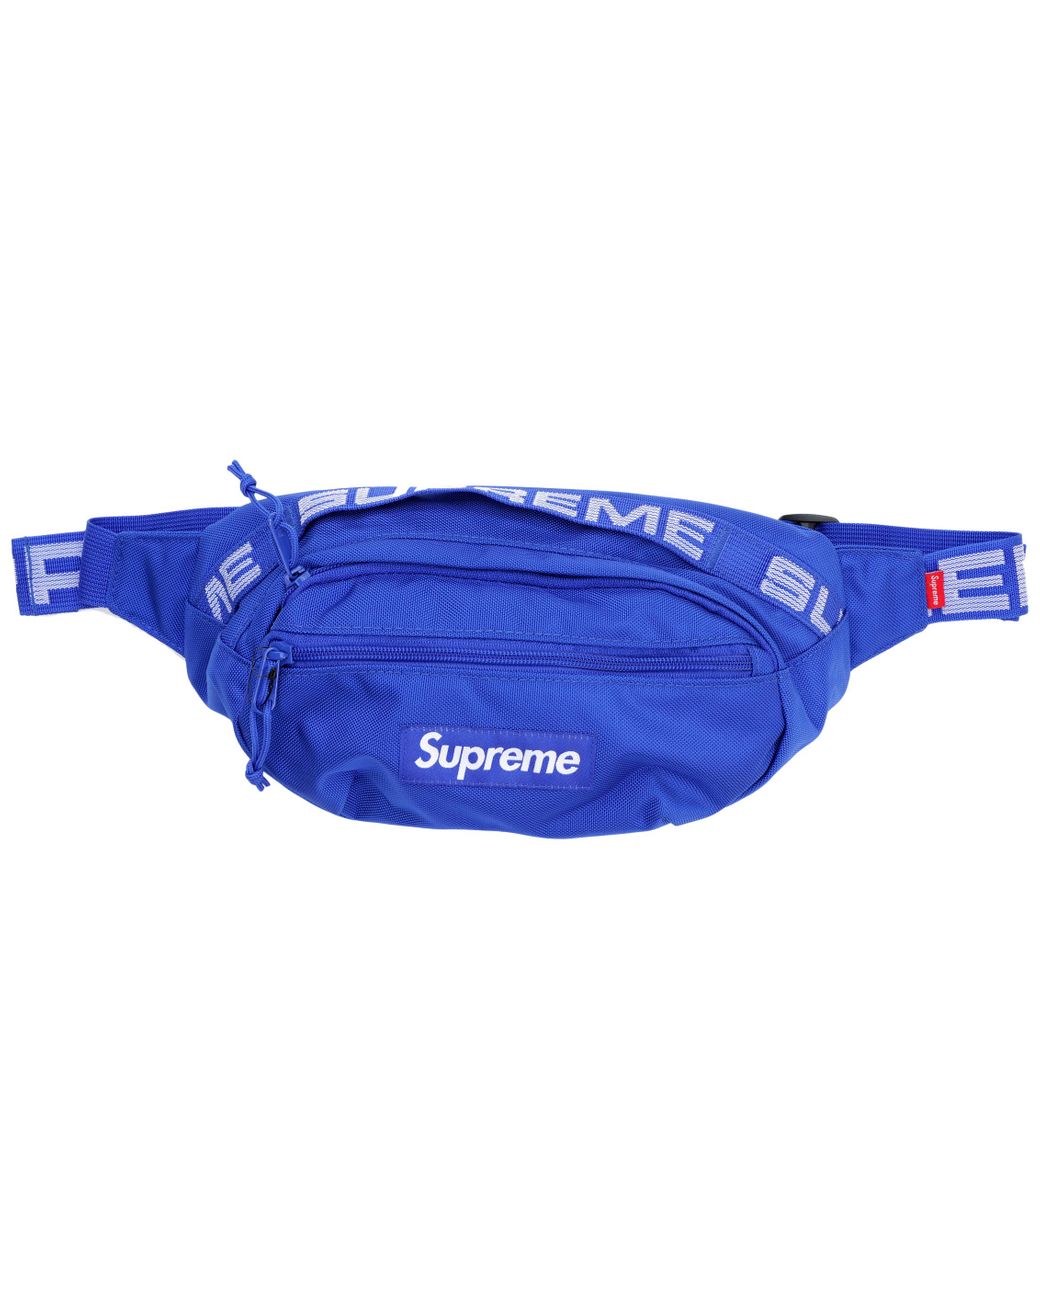 Supreme Waist Bag Ss18 In Blue Lyst - luxury dufflebag white 3 0 roblox